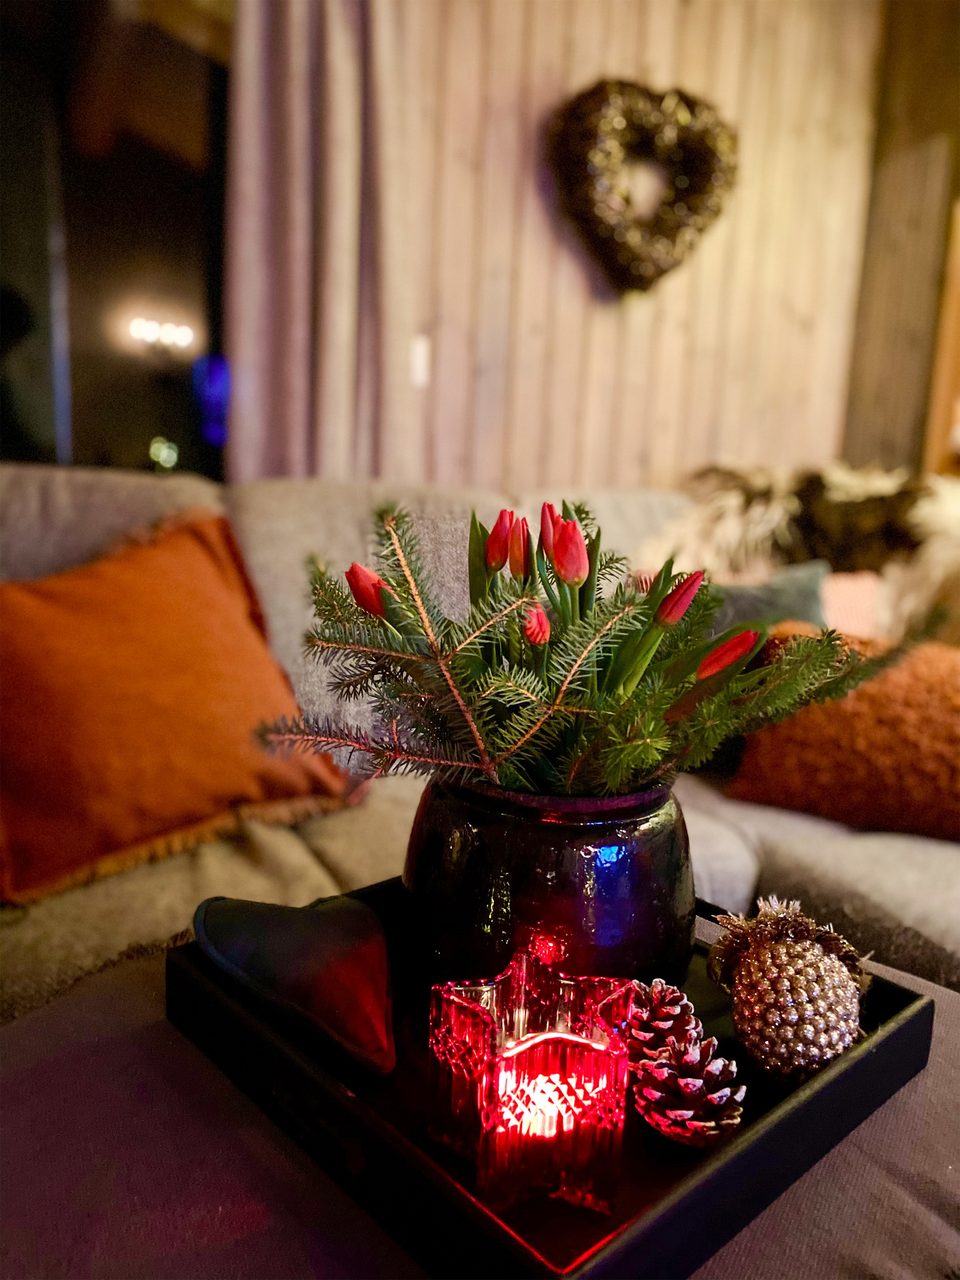 Christmas ornament, Furniture, Plant, Table, Decoration, Window, Flowerpot, Couch, Textile, Orange